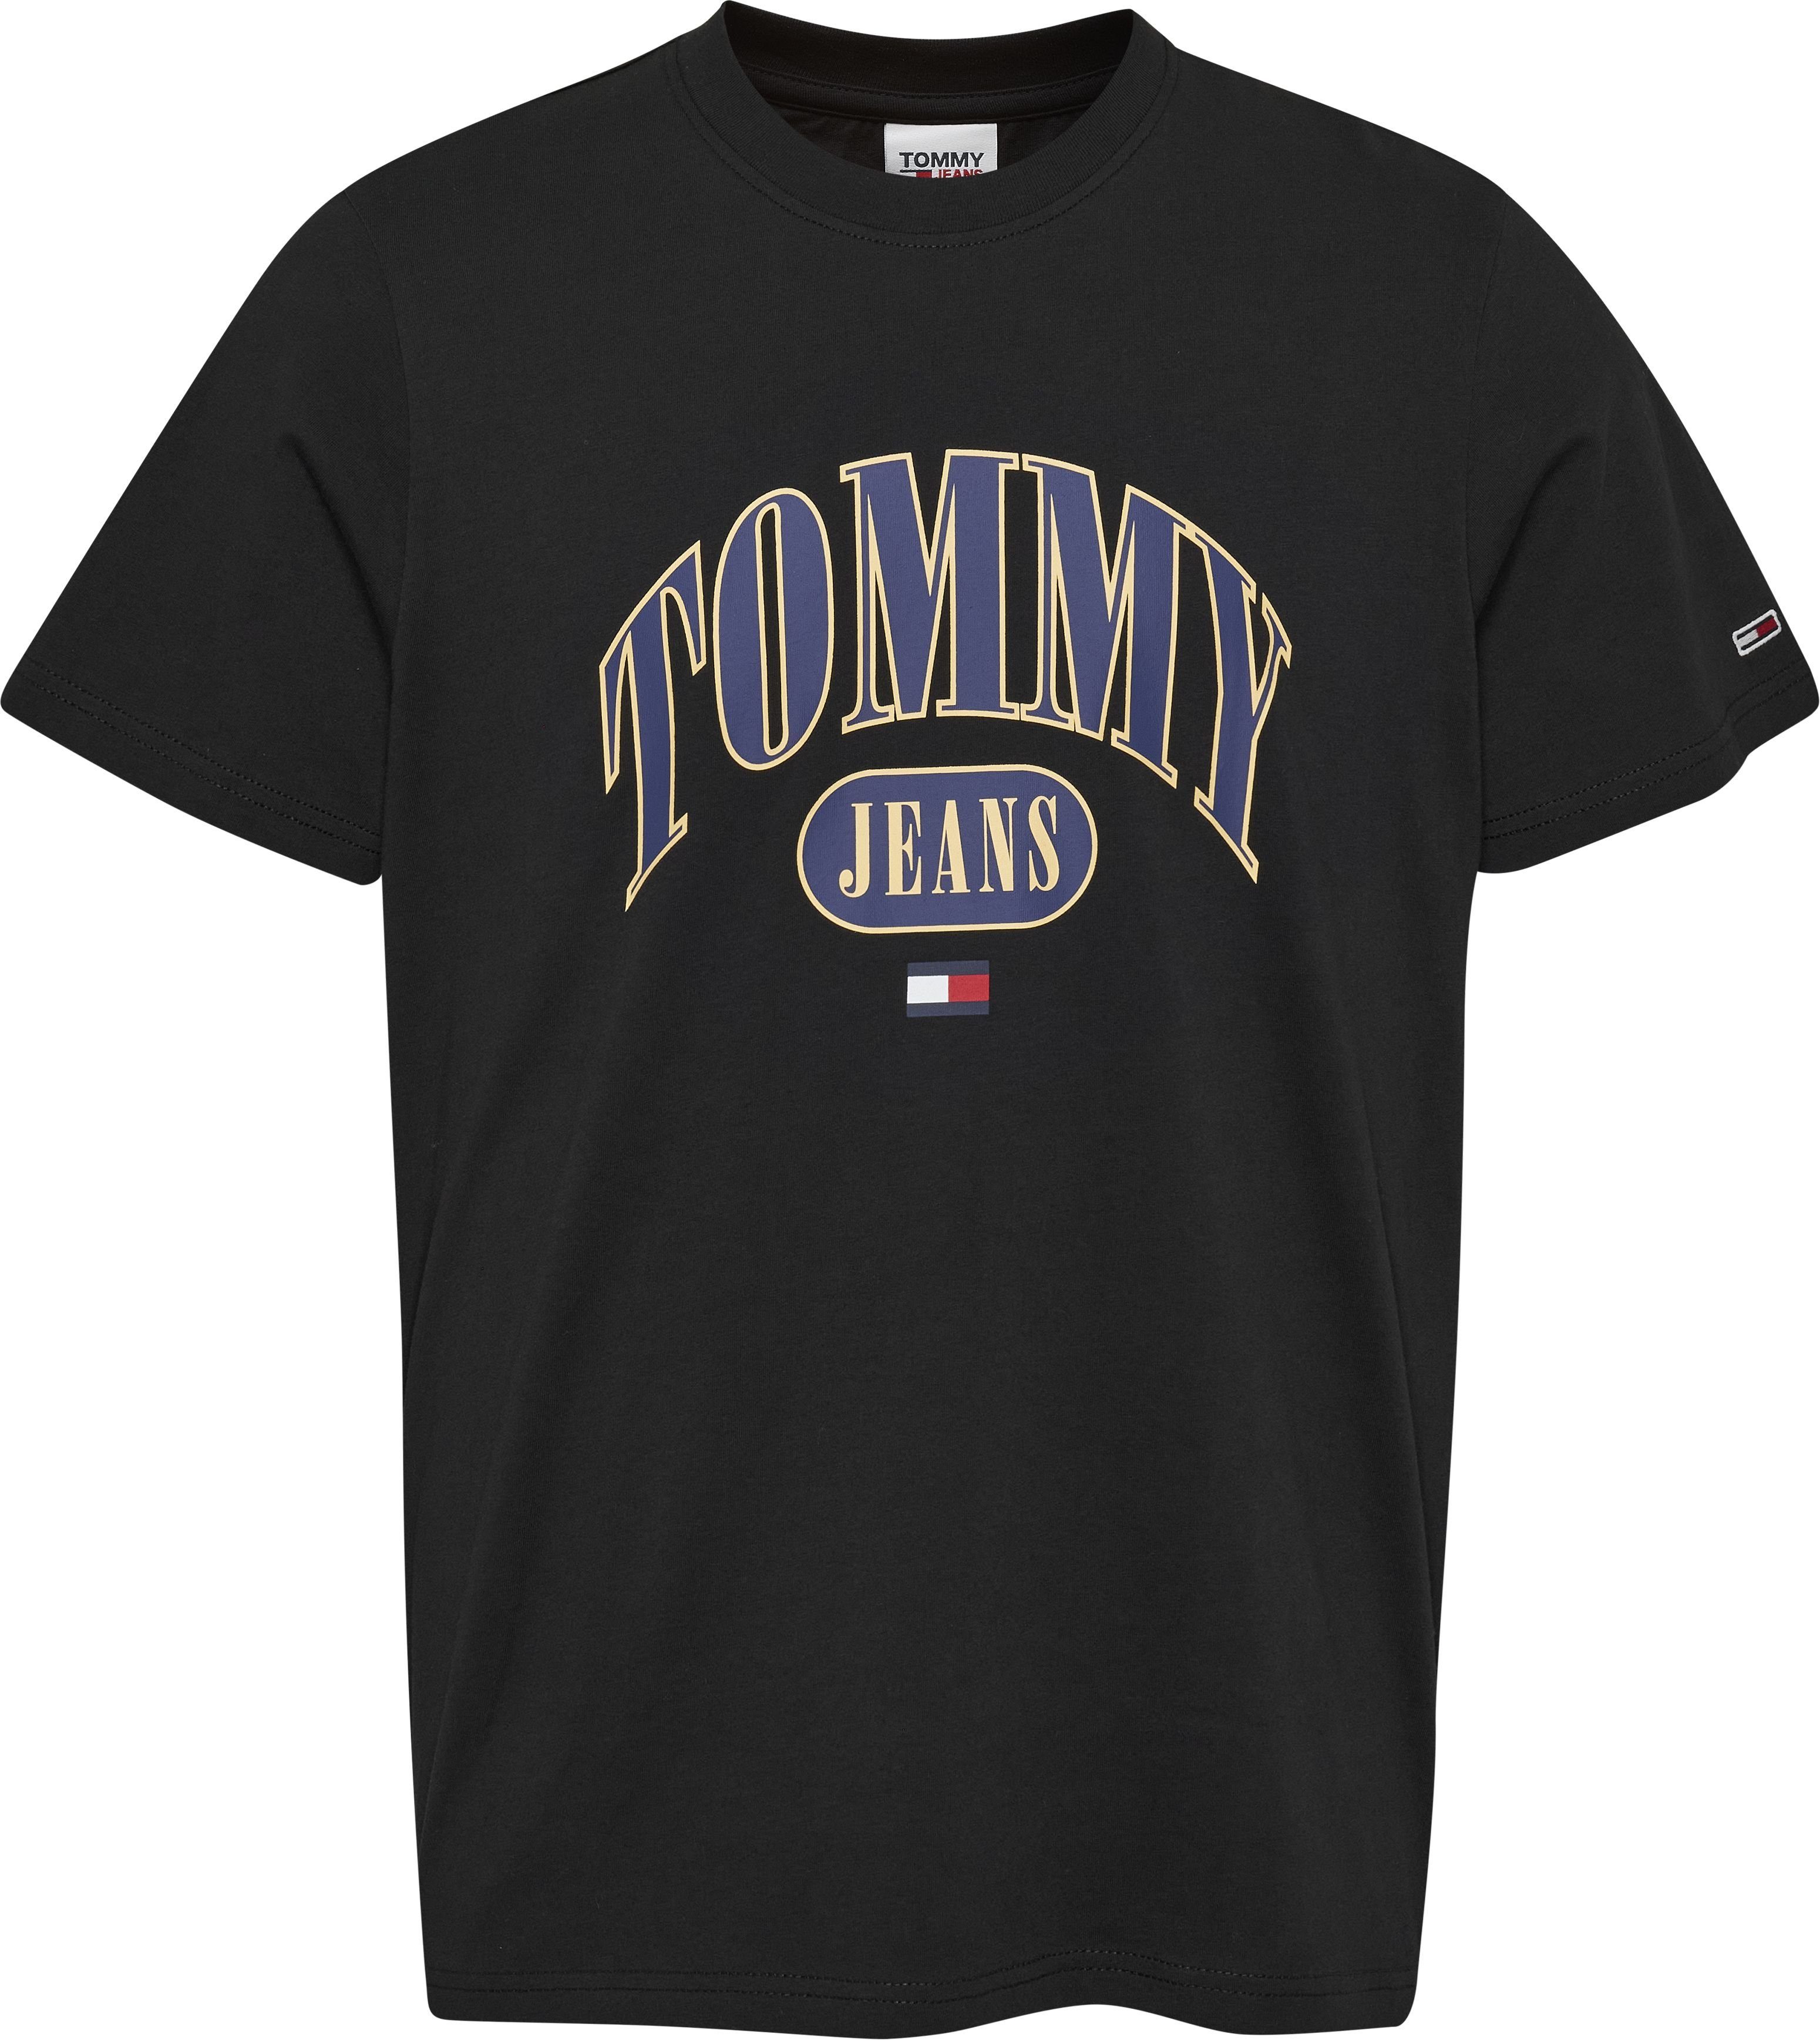 TEE mit Logodruck REG T-Shirt Jeans Shirt Black Tommy ENTRY